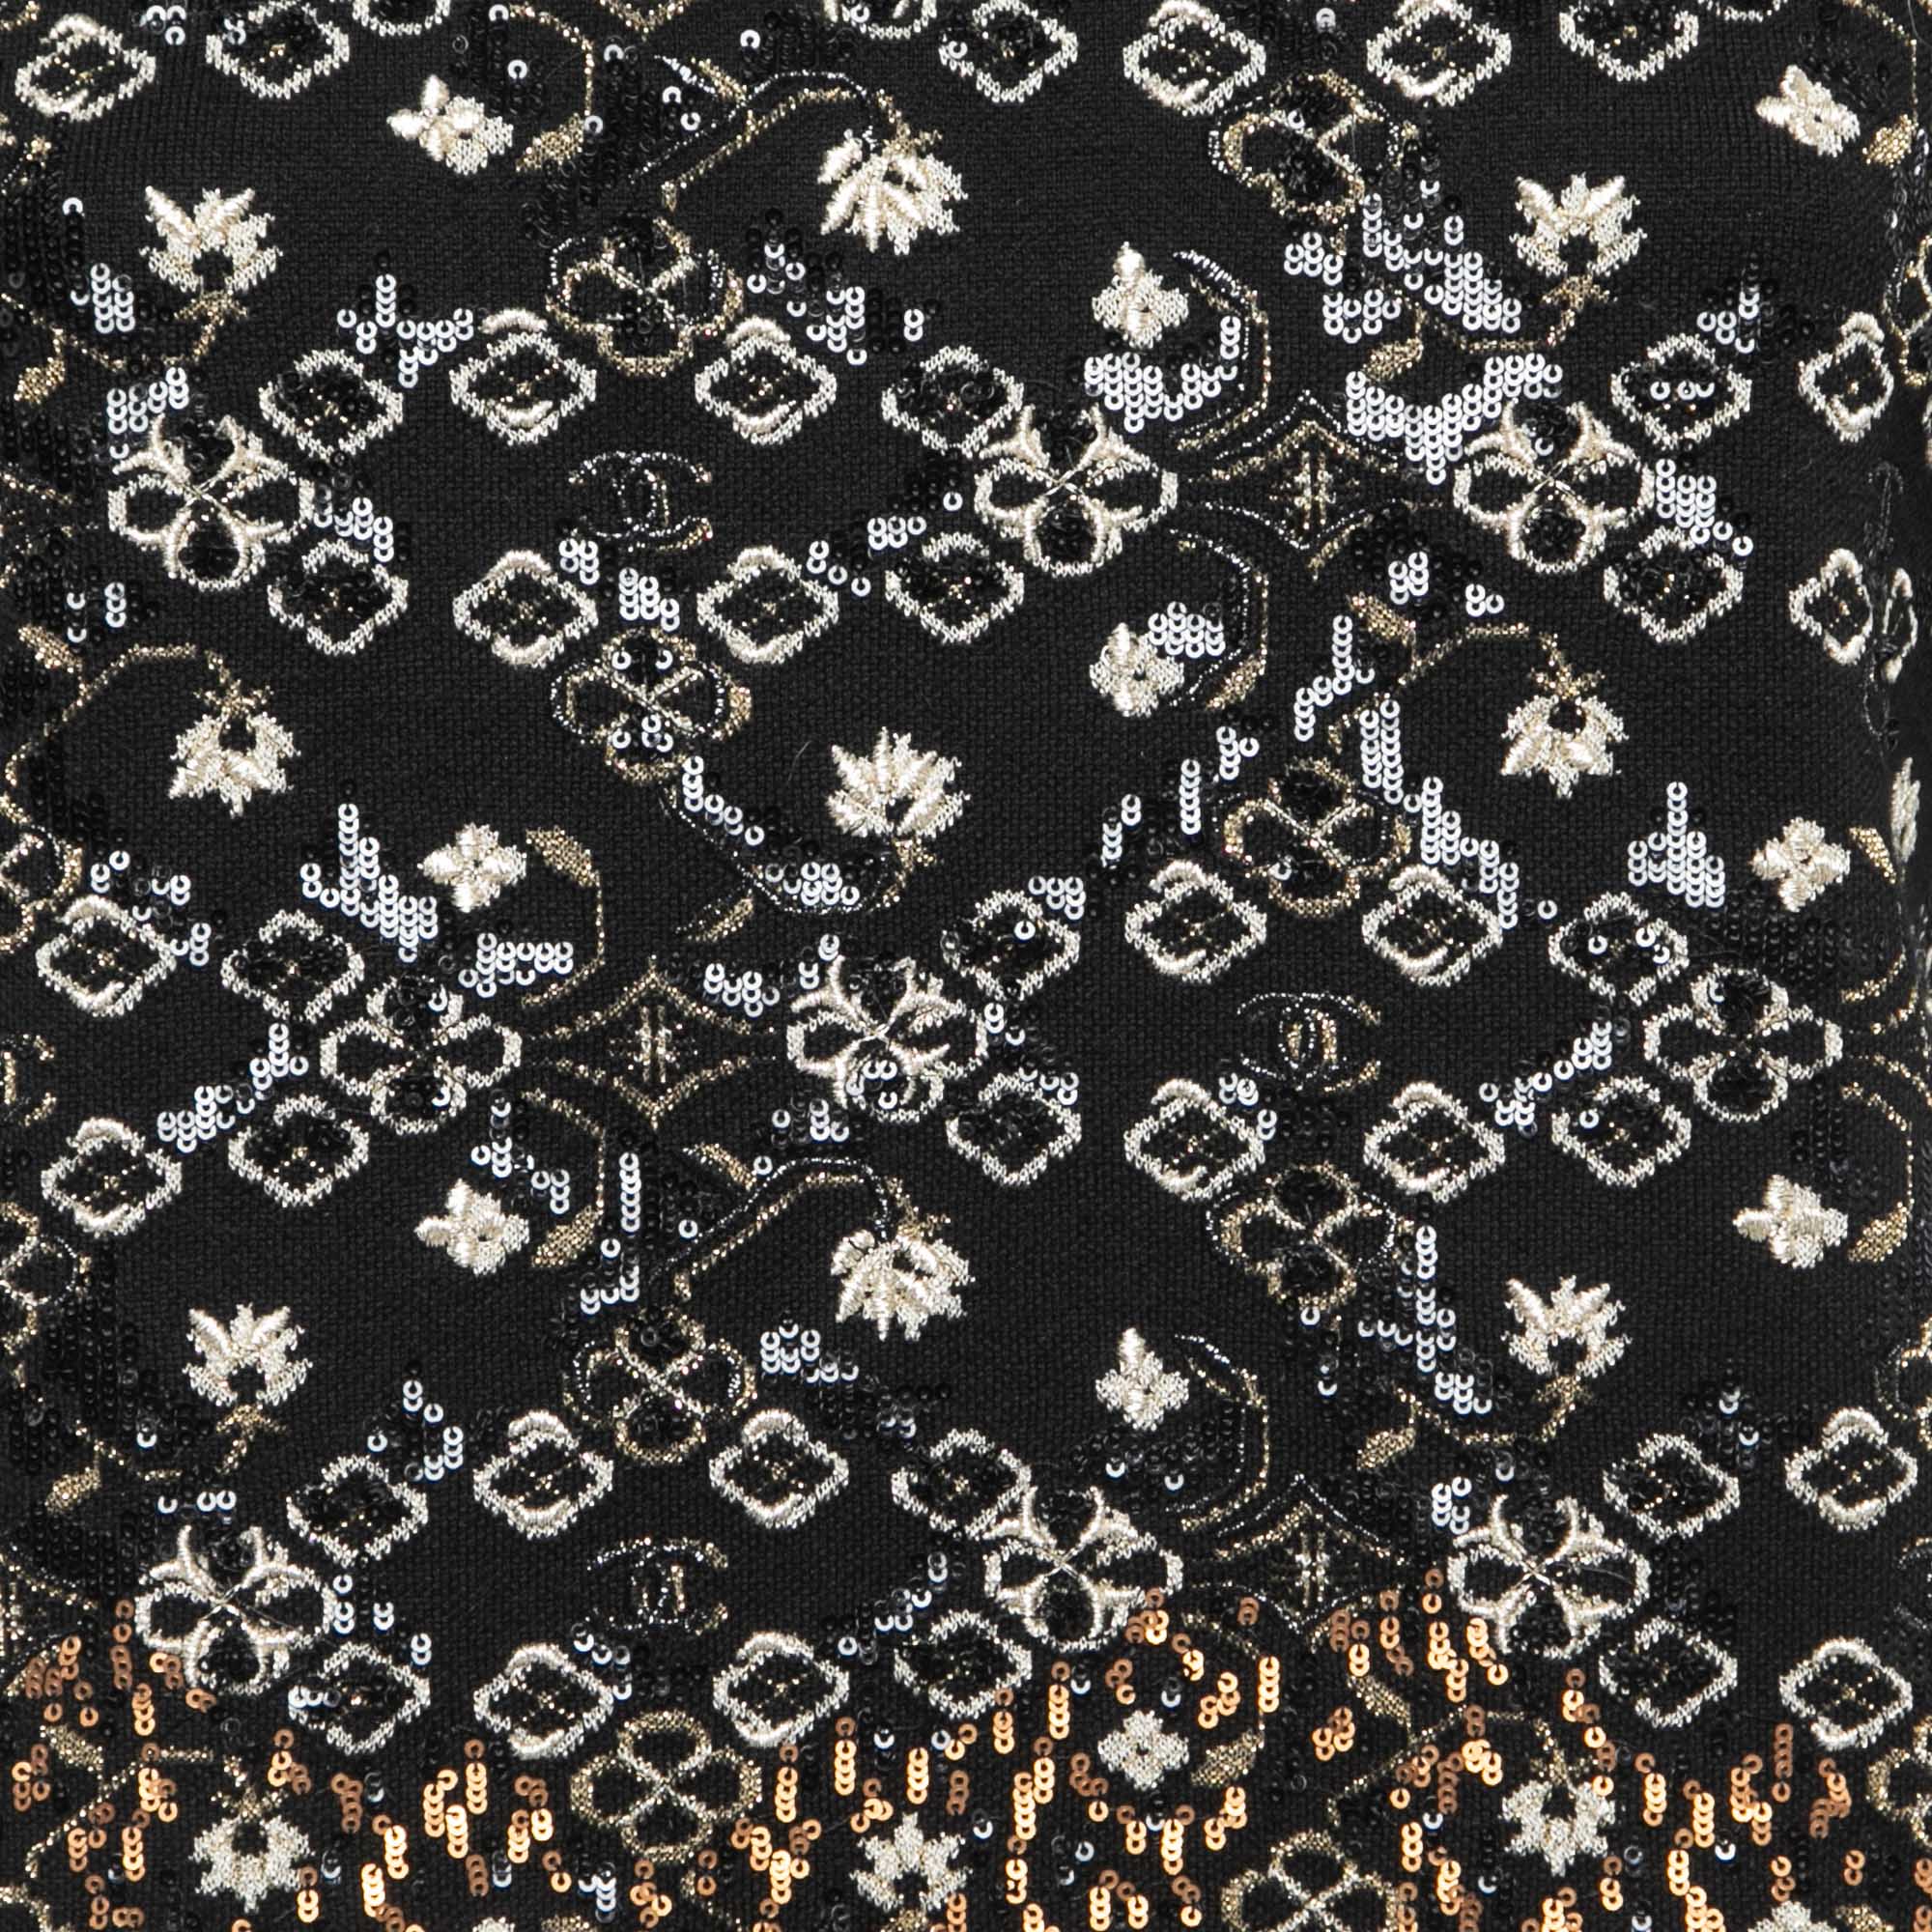 Chanel Black Knit Sequin Embroidered Jumper M